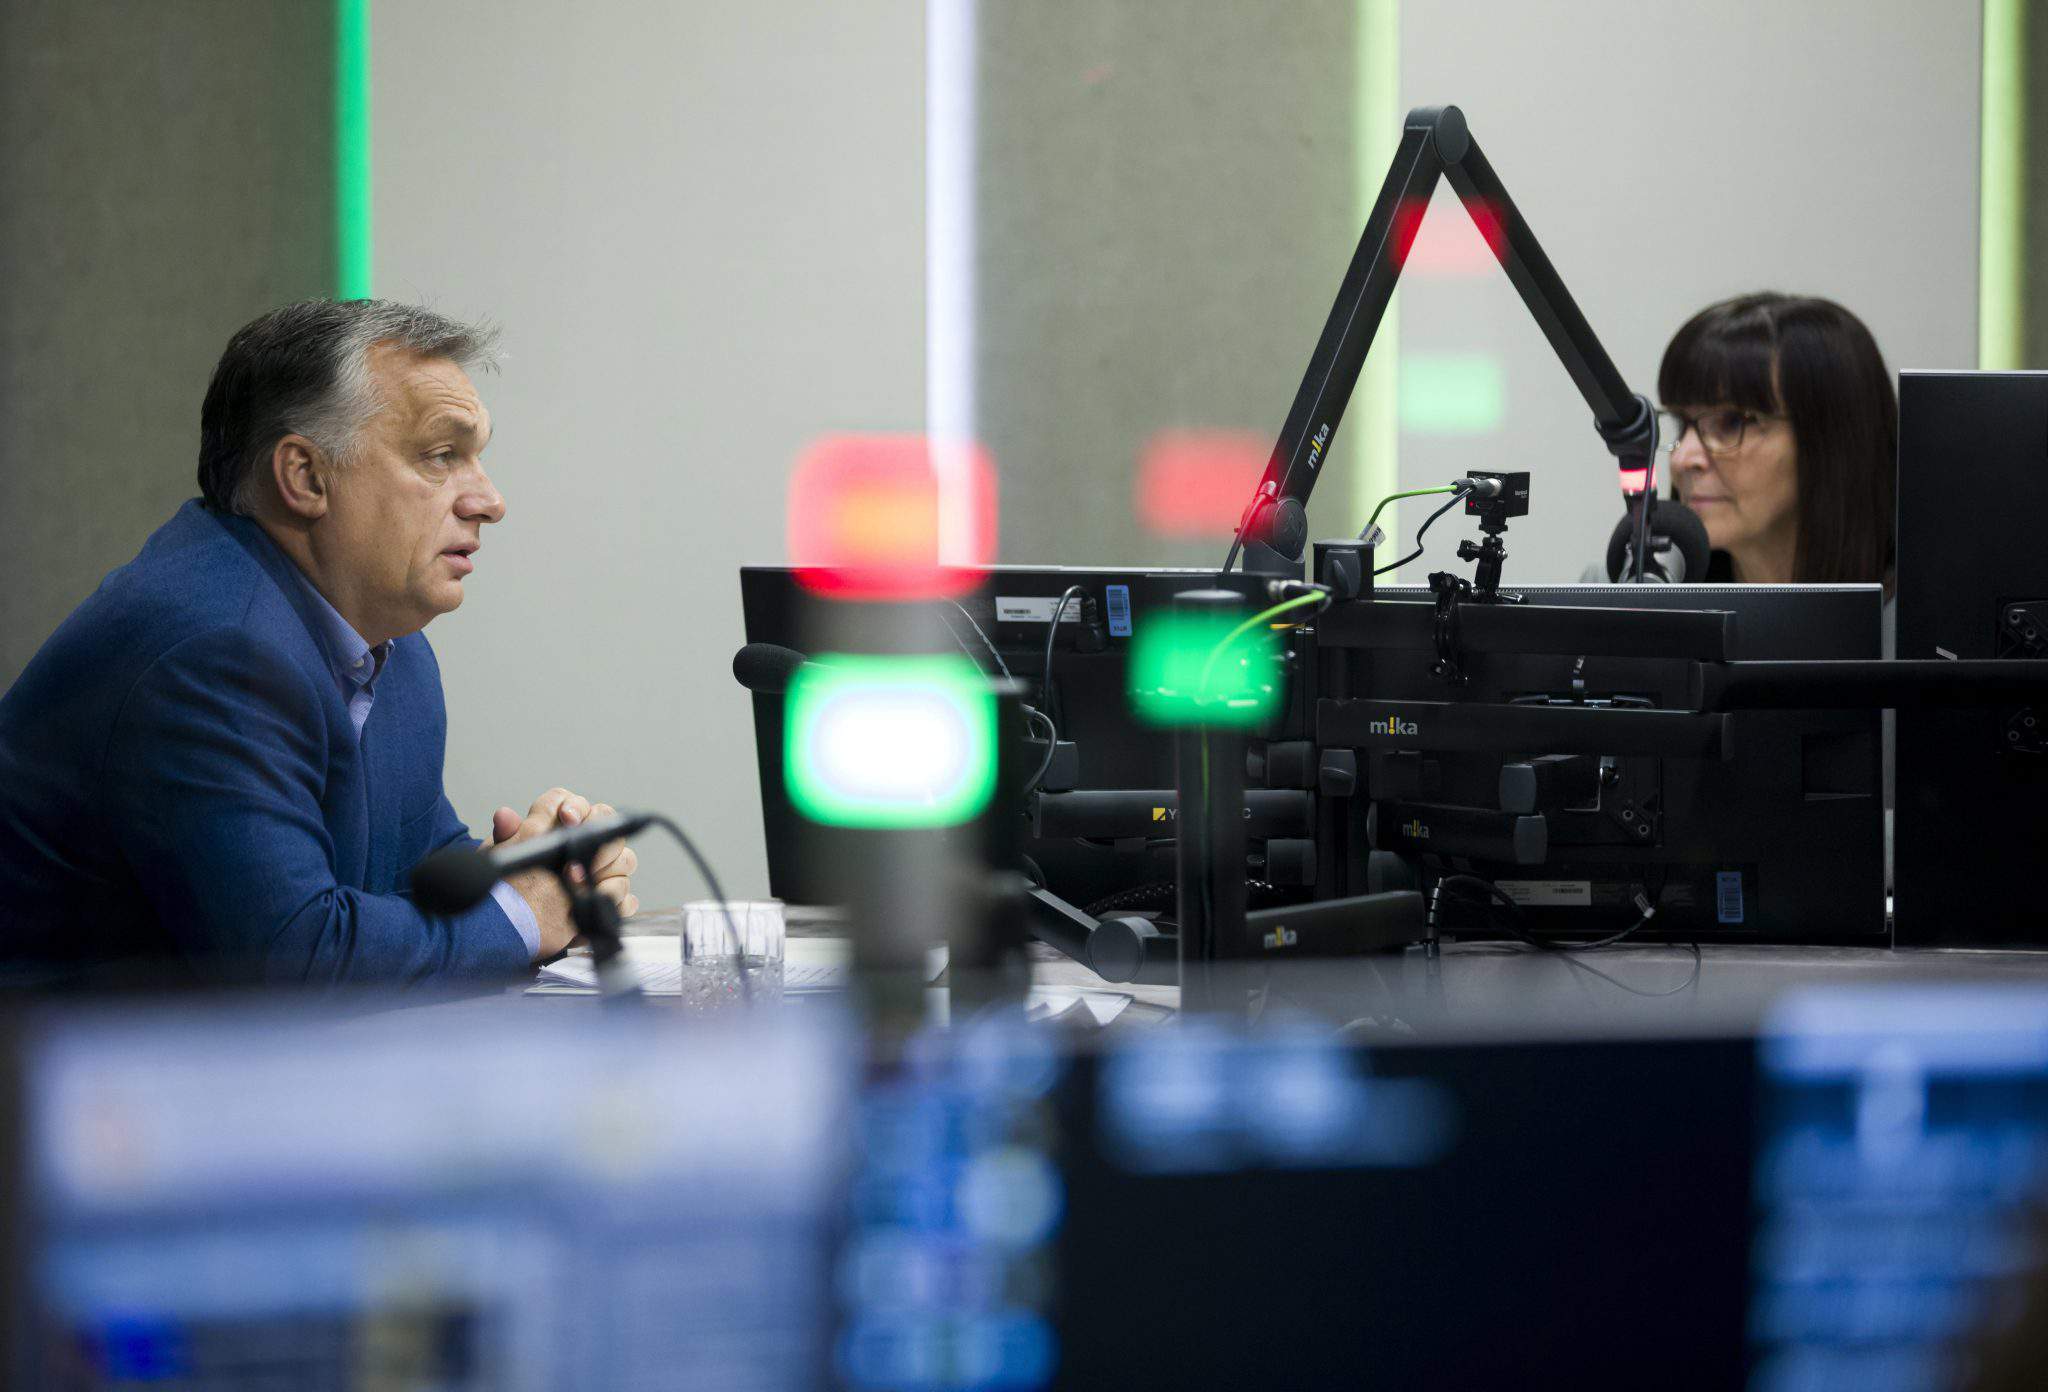 intervista radiofonica orbán